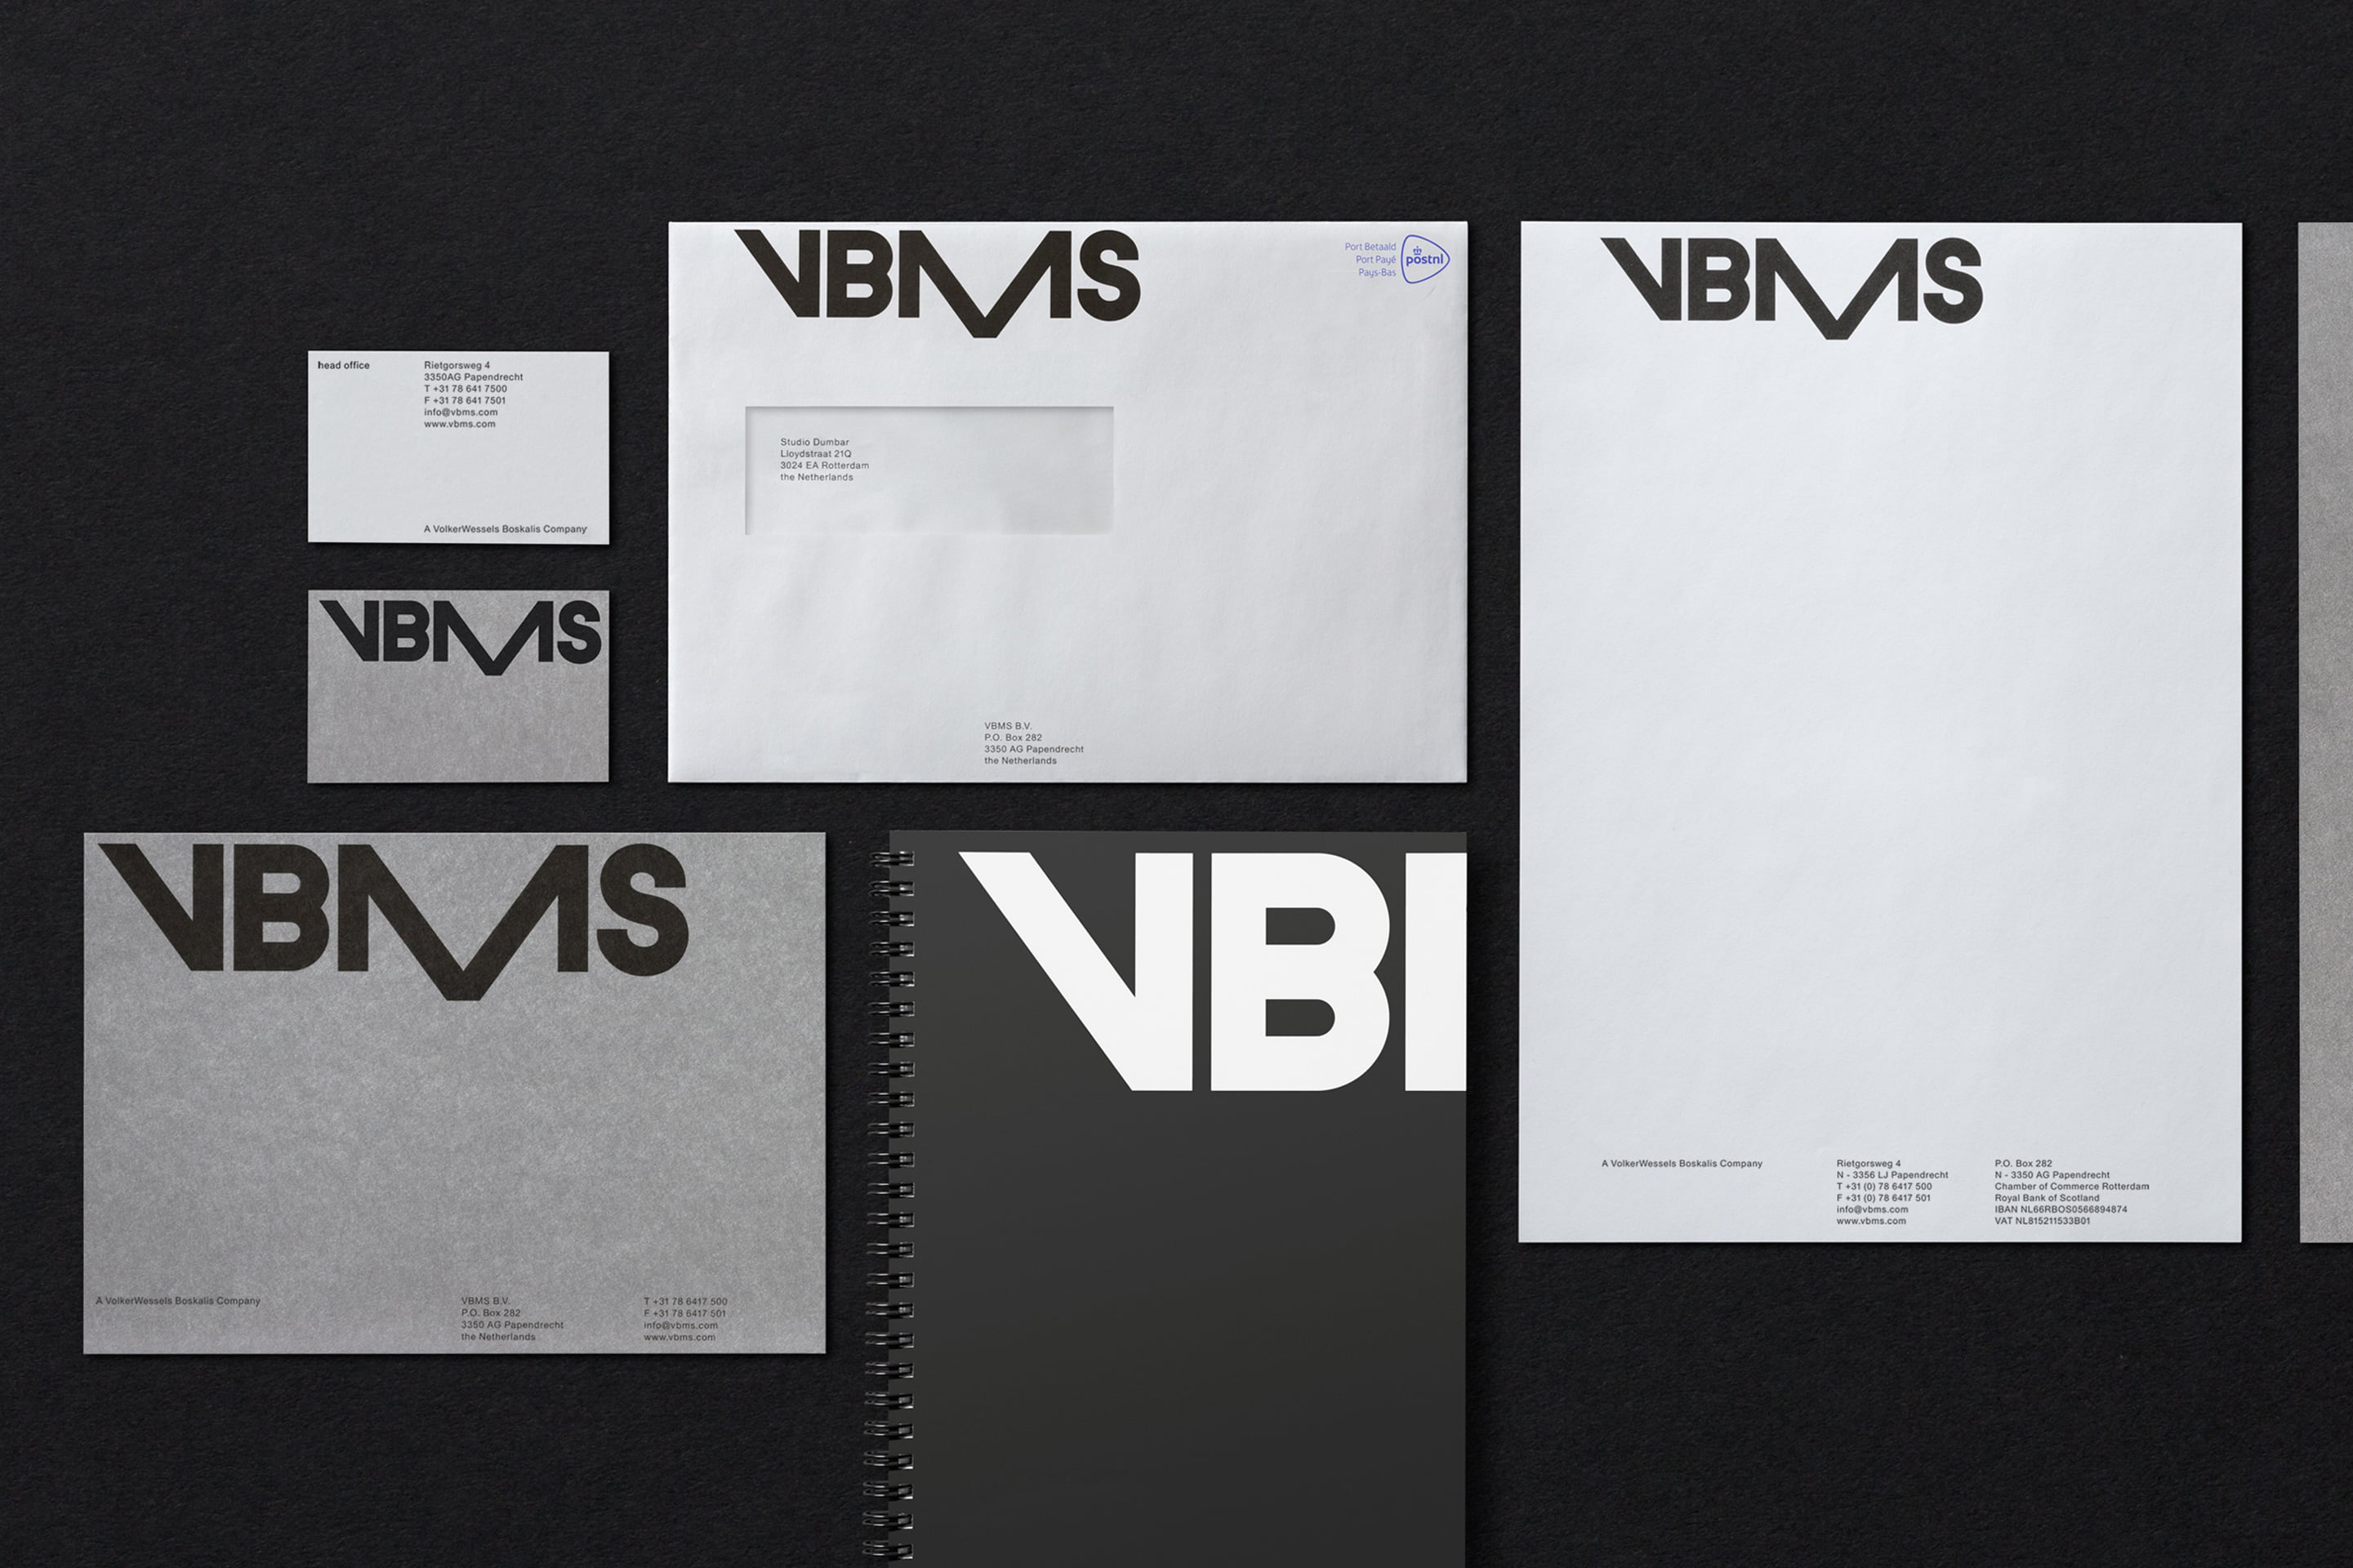 studio dumbar design visual brand identity for VBMS expert in offshore installations stationer design